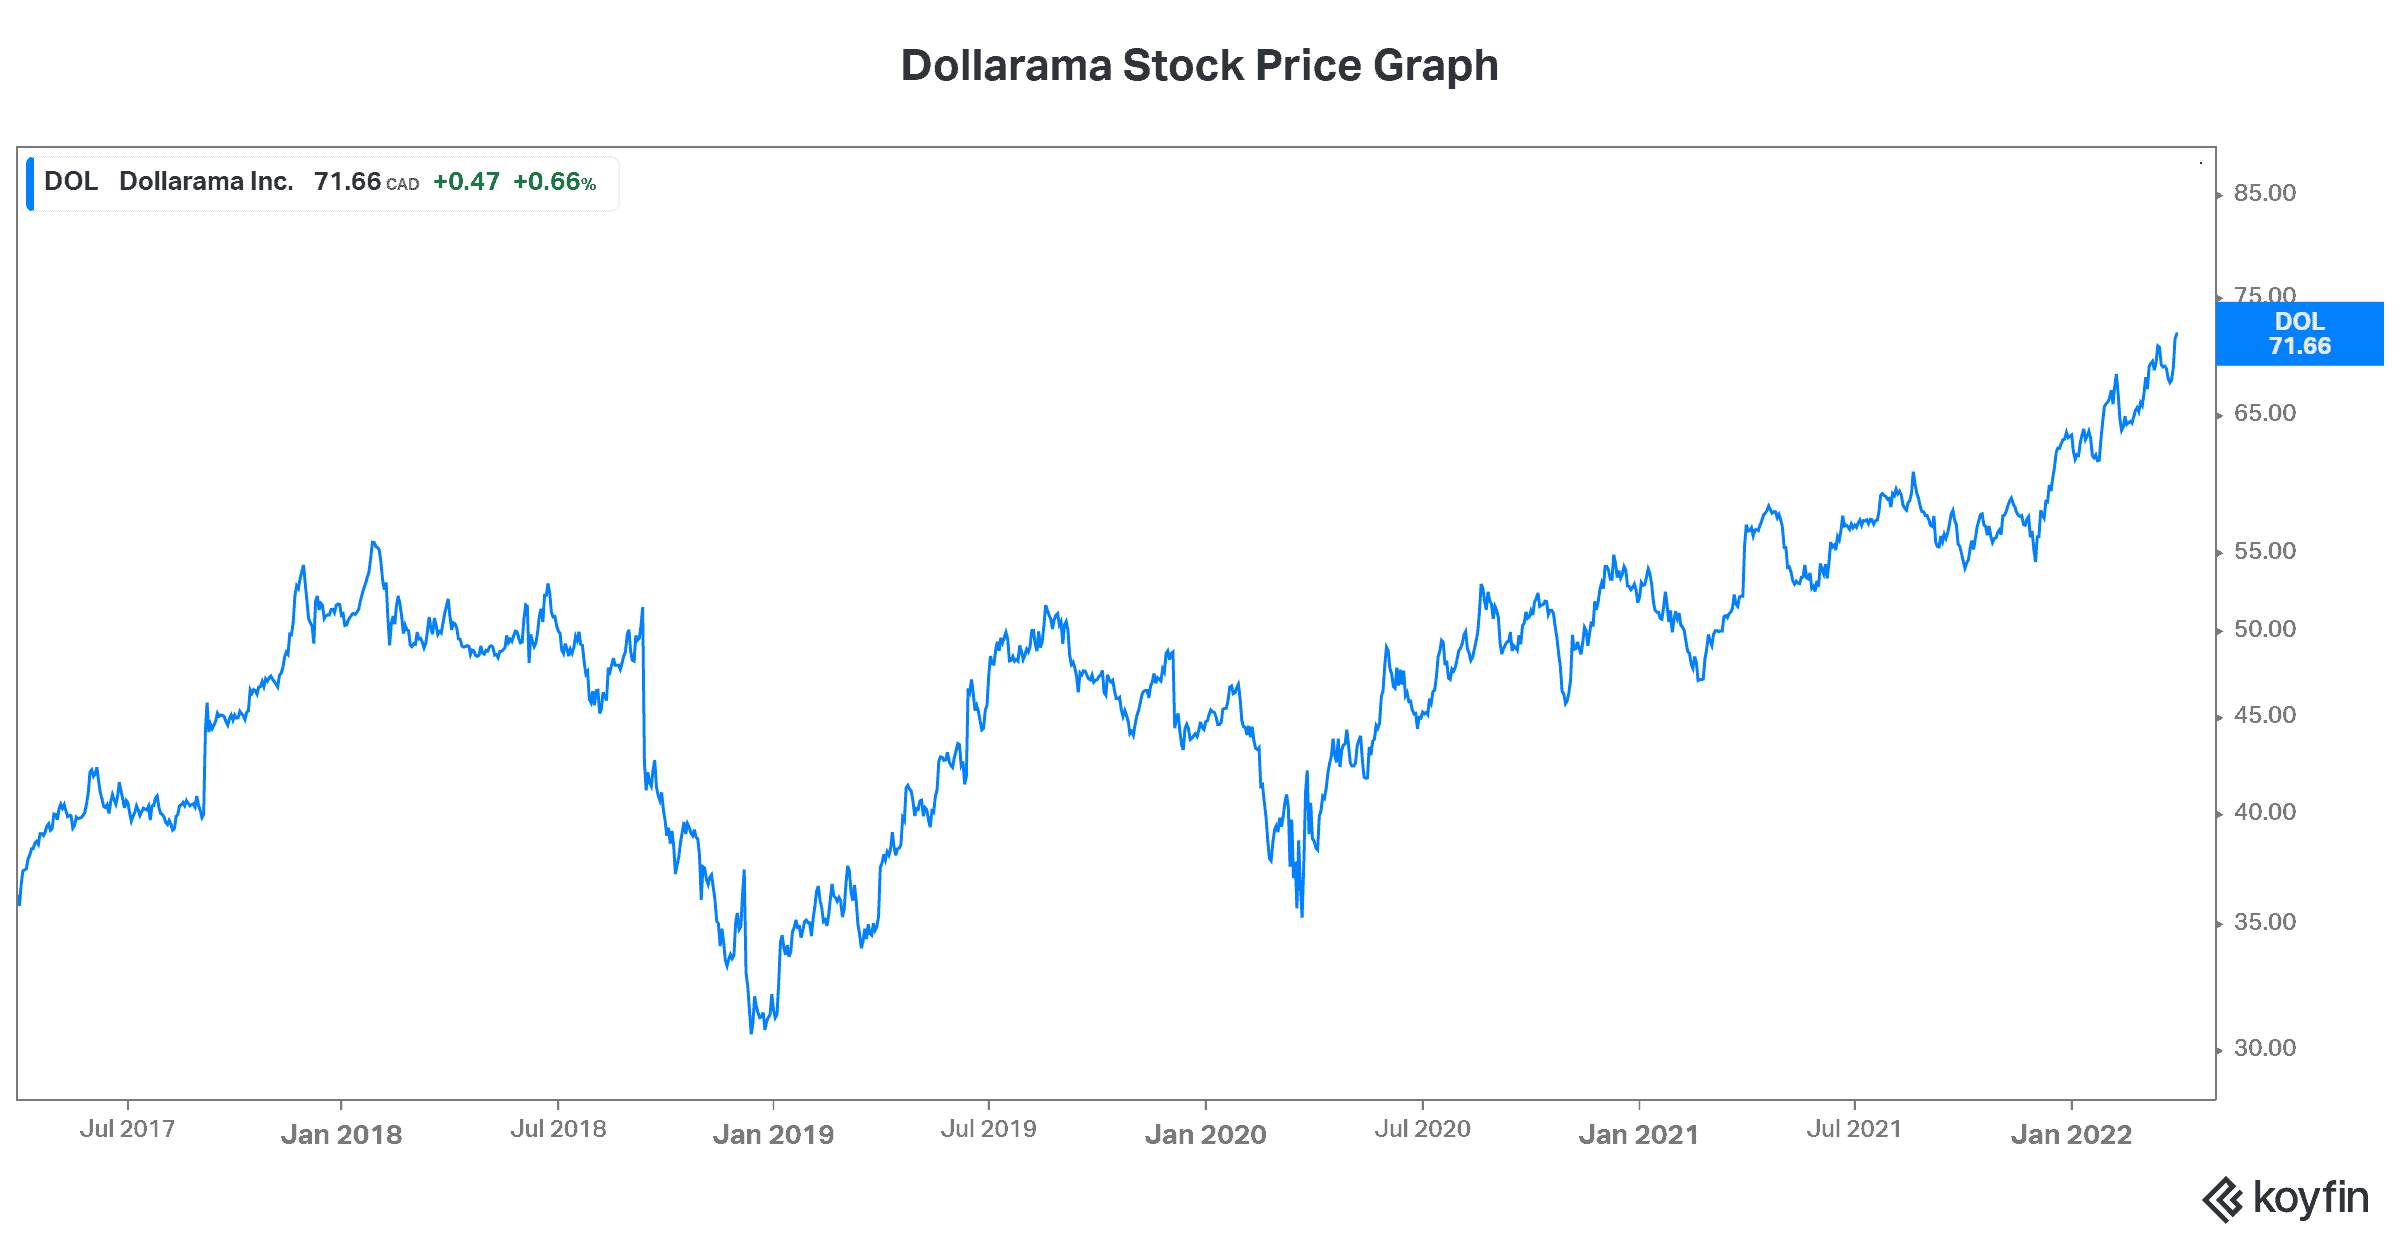 Dollarama stock price